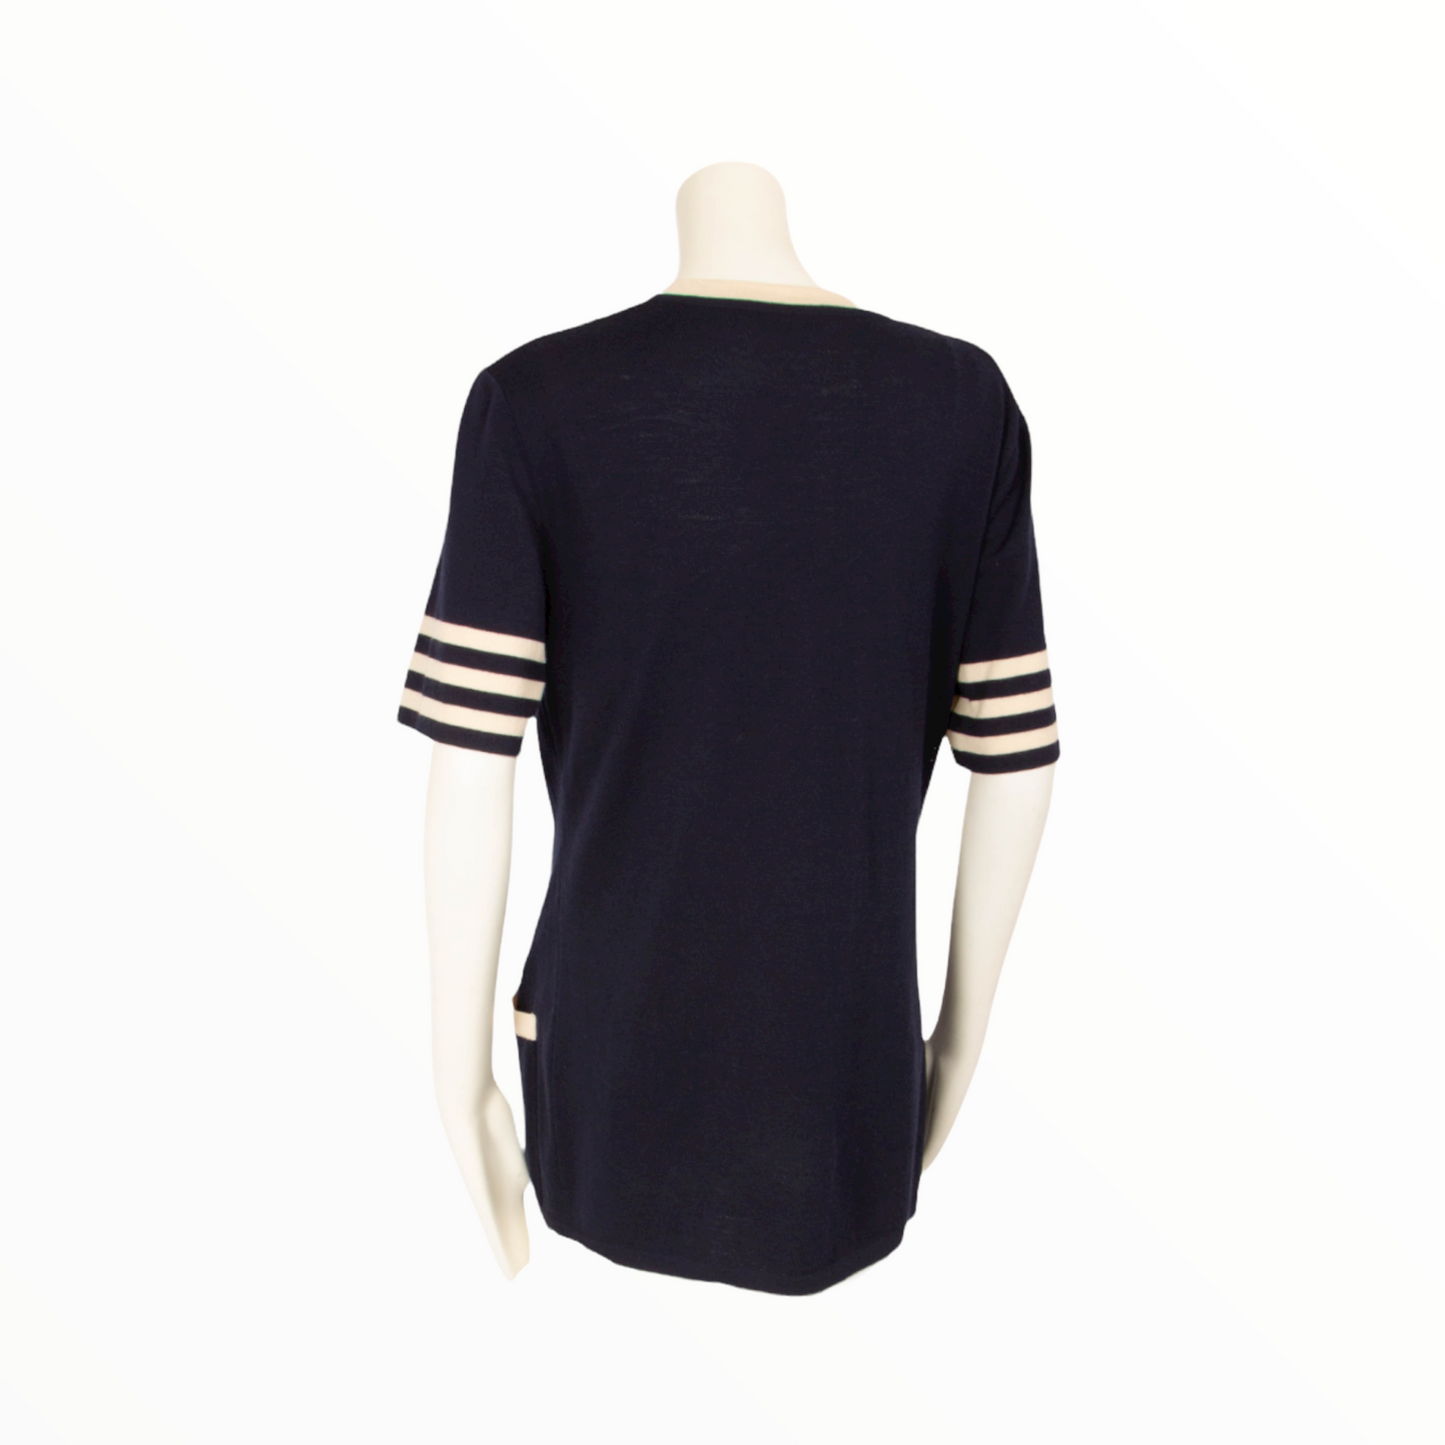 Louis Feraud vintage short-sleeved cardigan - M - 2000s